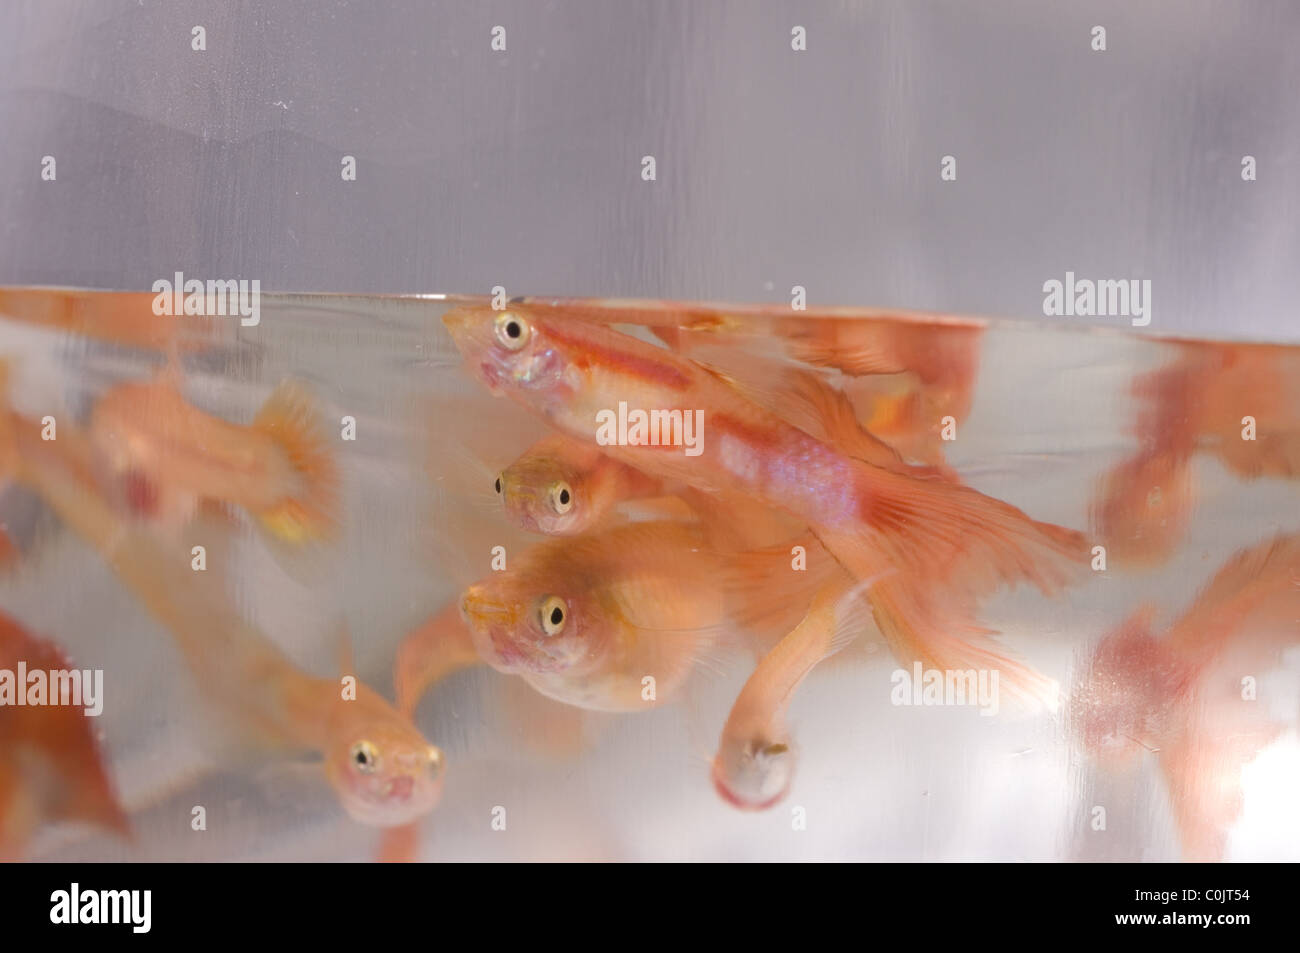 Young guppy fish (Poecilia reticulata) inside a plastic bag Stock Photo